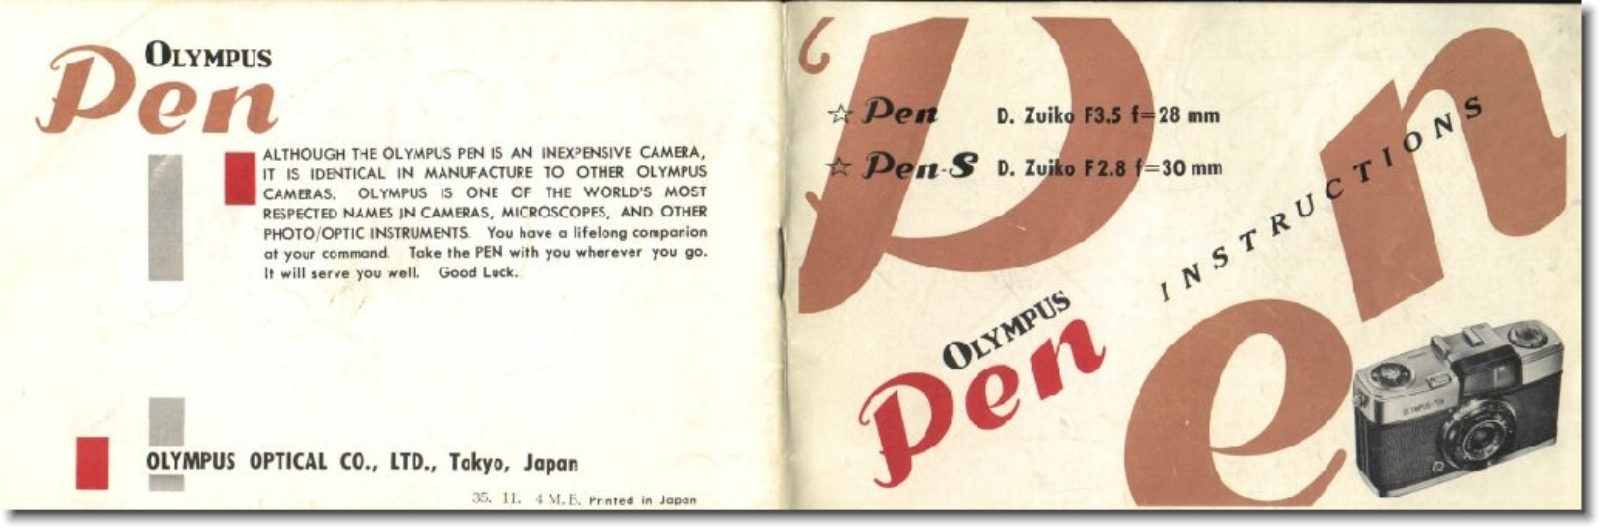 Olympus Pen S, Pen Operating Instructions